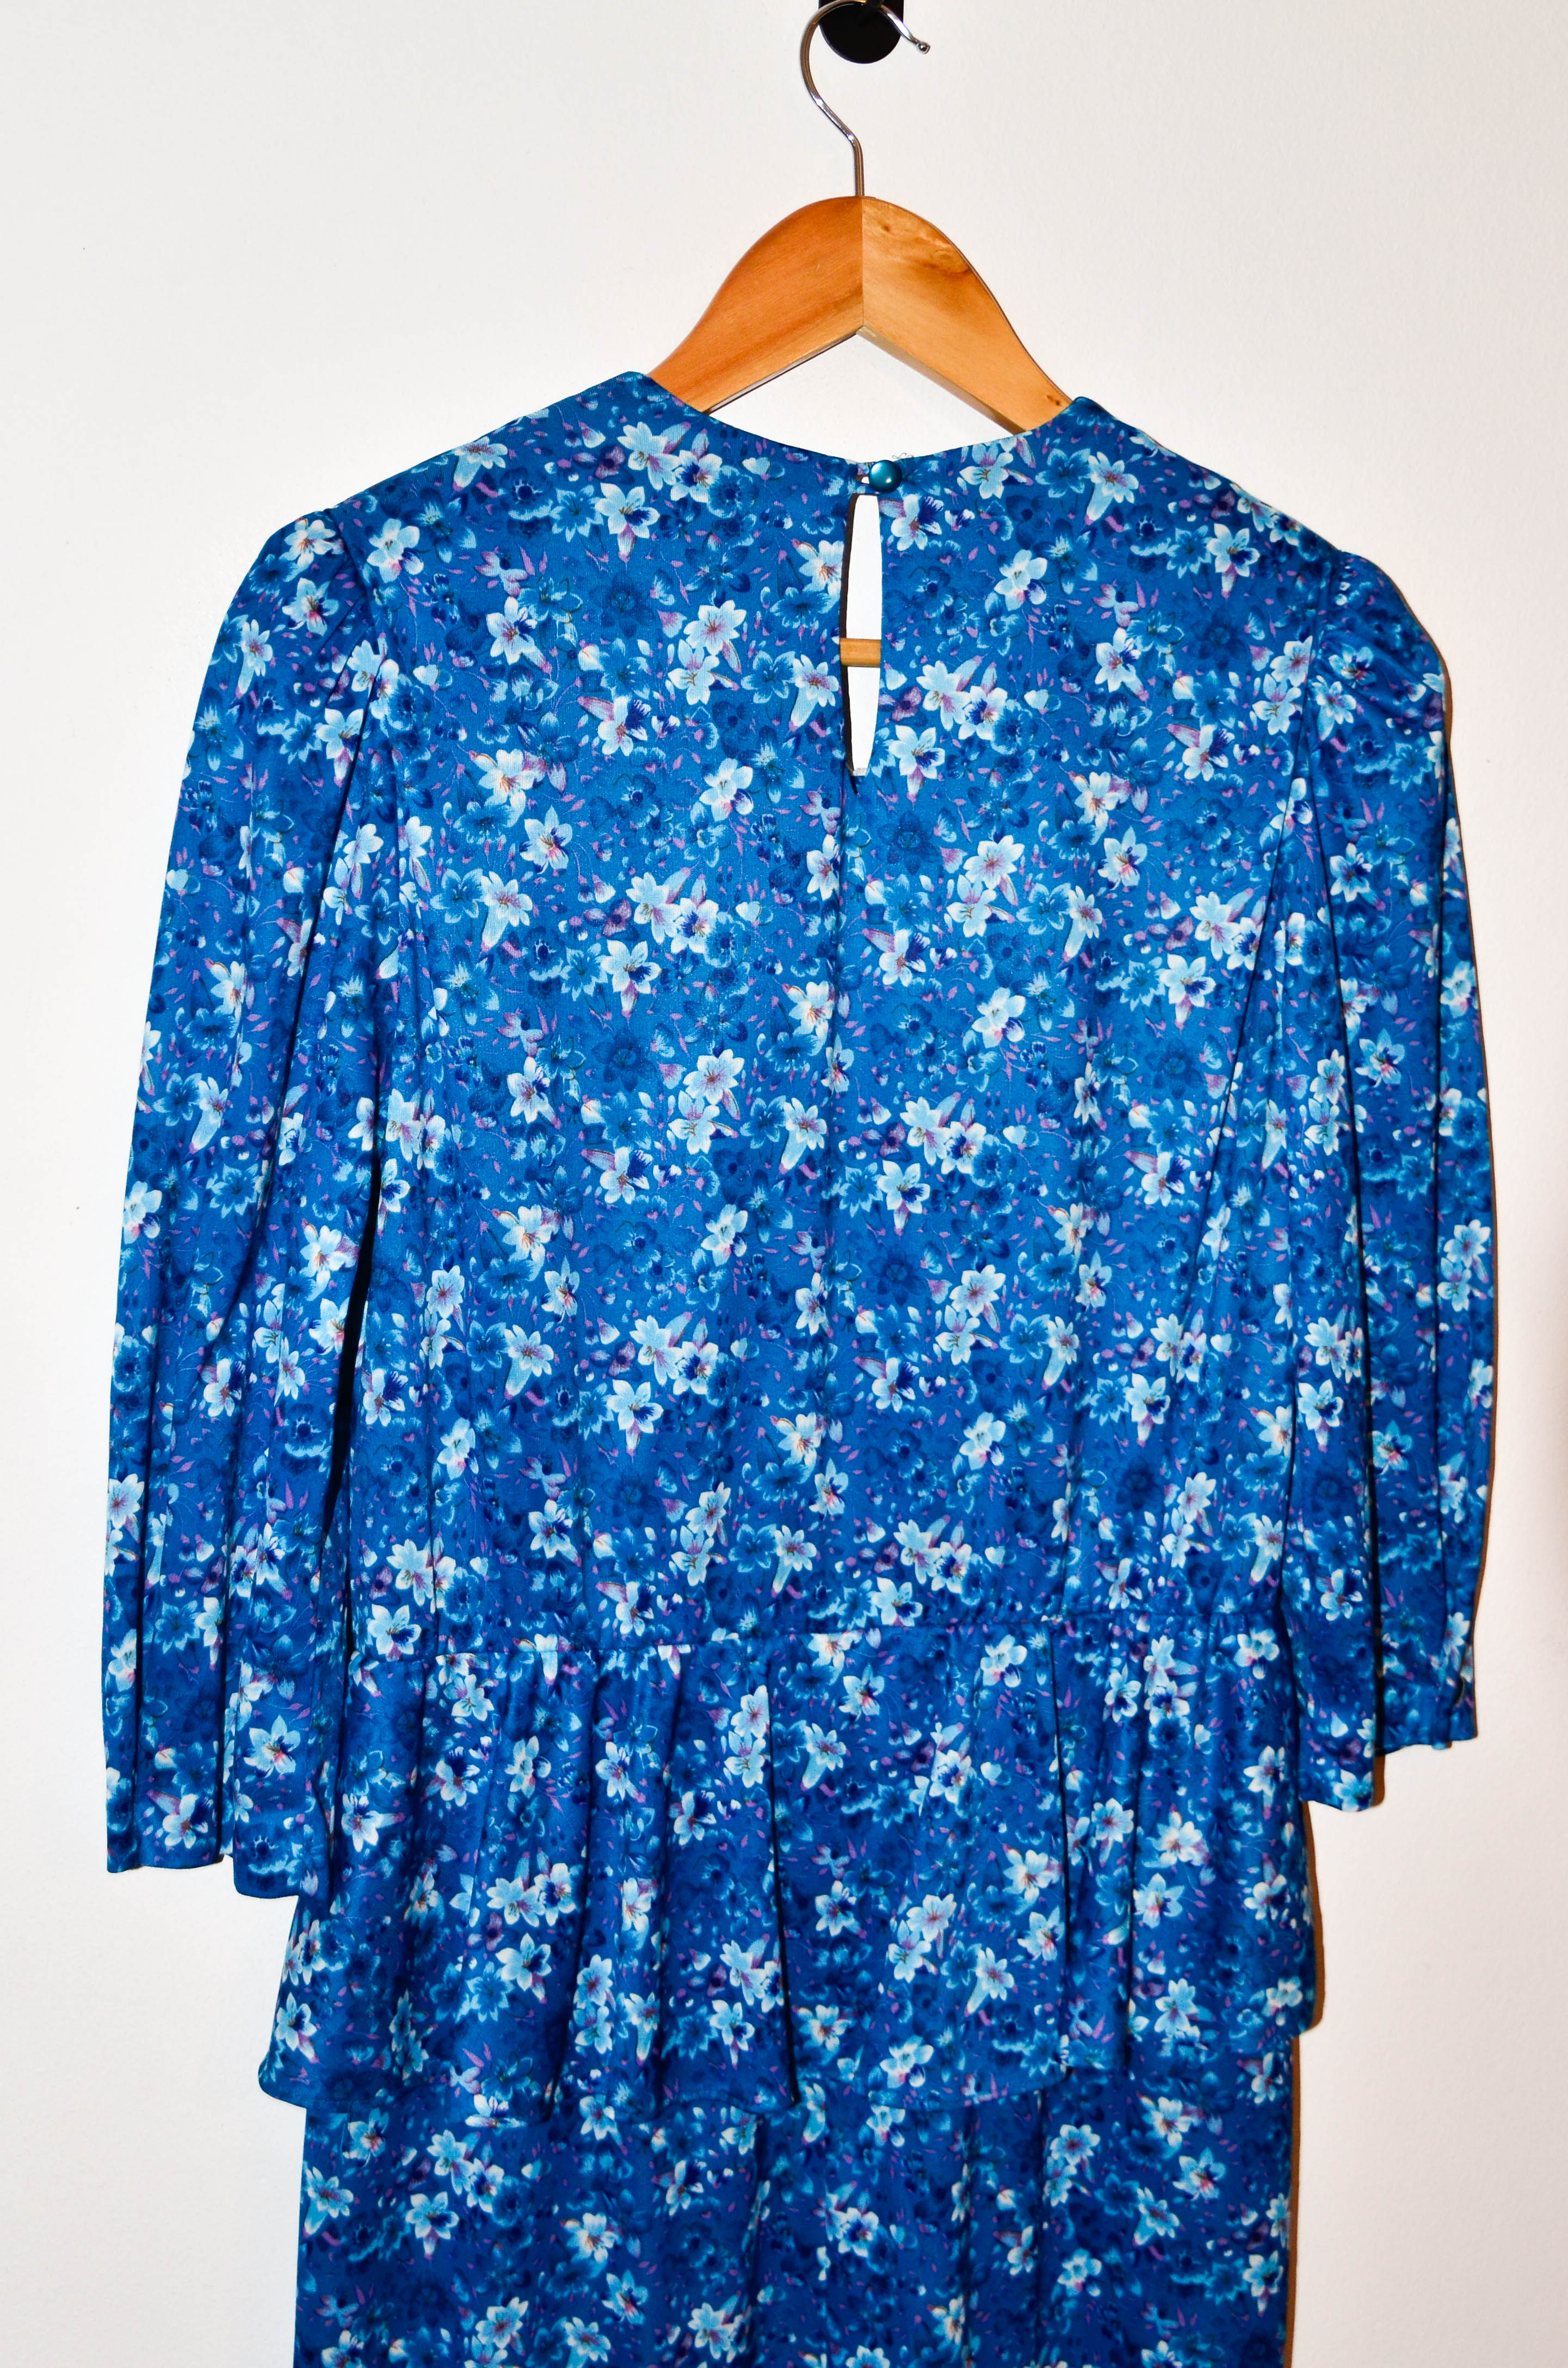 Vestido floral ochentero blue